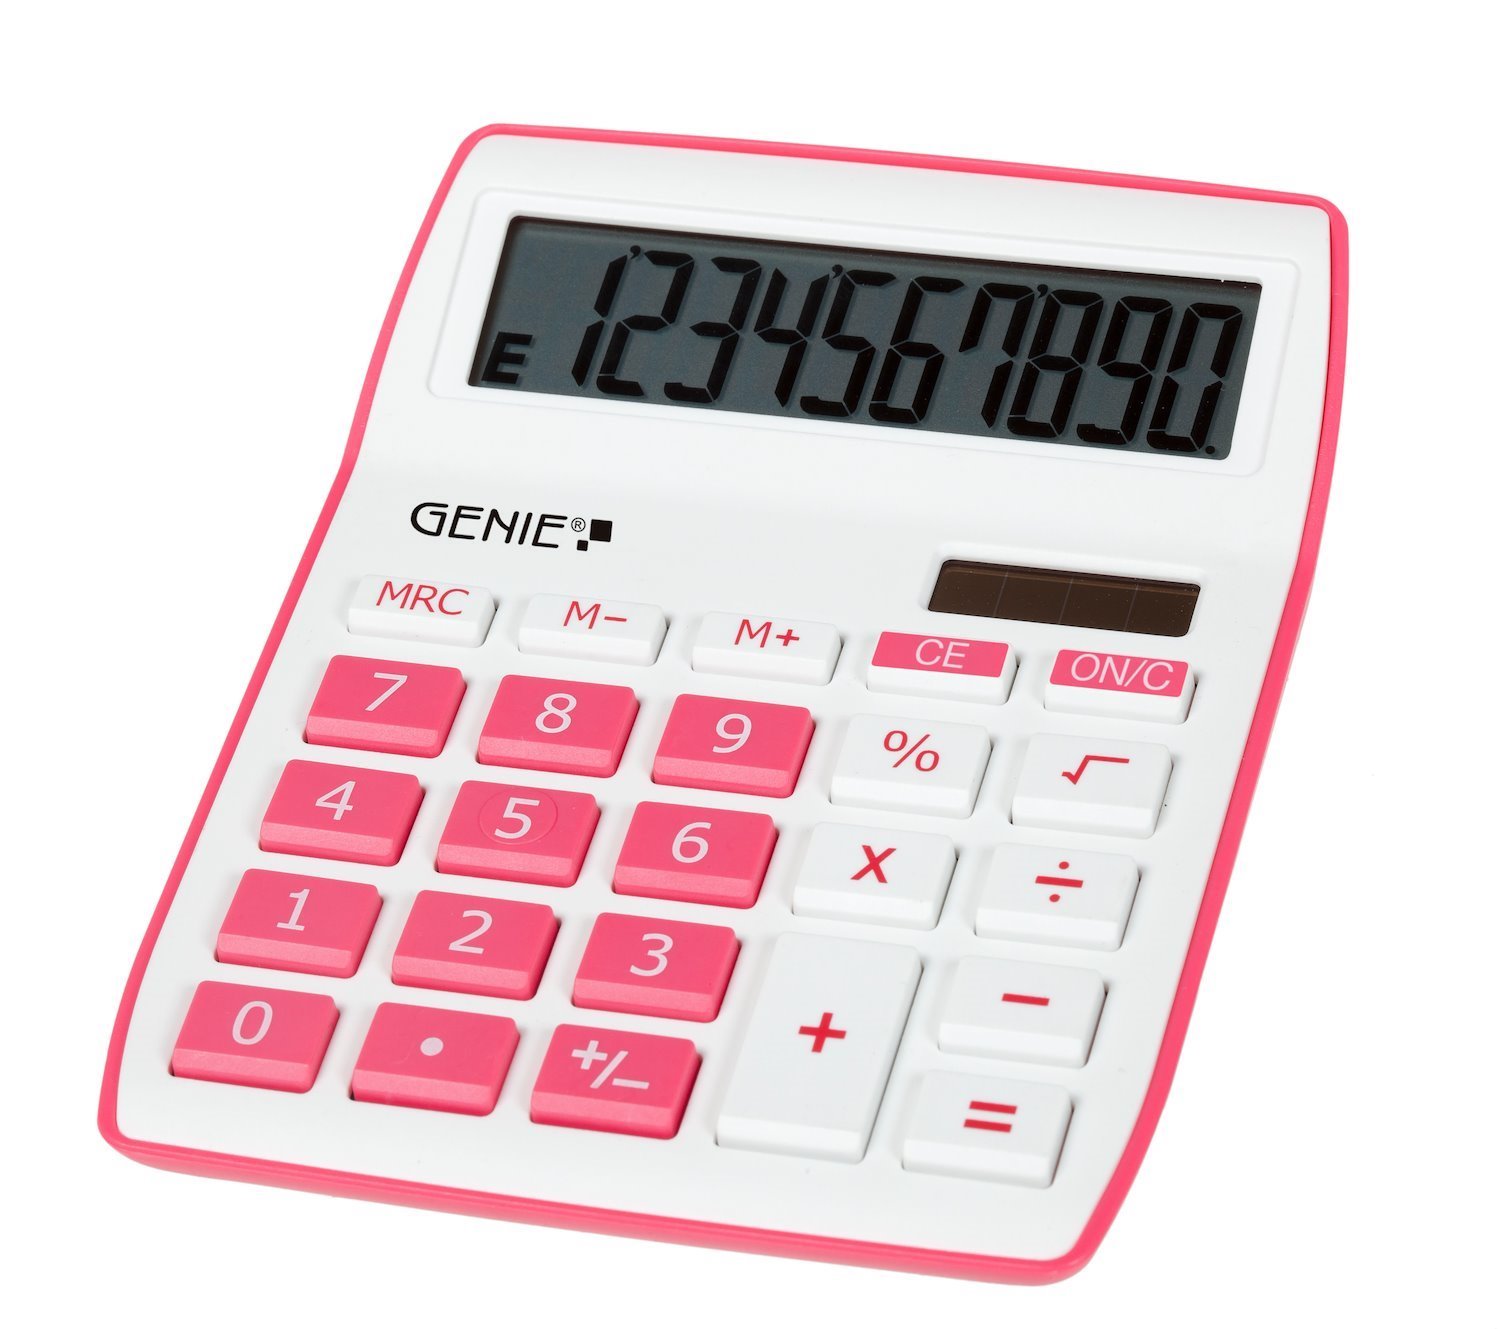 Genius Genie 840 P Calculator Desktop Display Pink White (Genie 840P 10 Digit Desktop Calculator Pink - 12264)